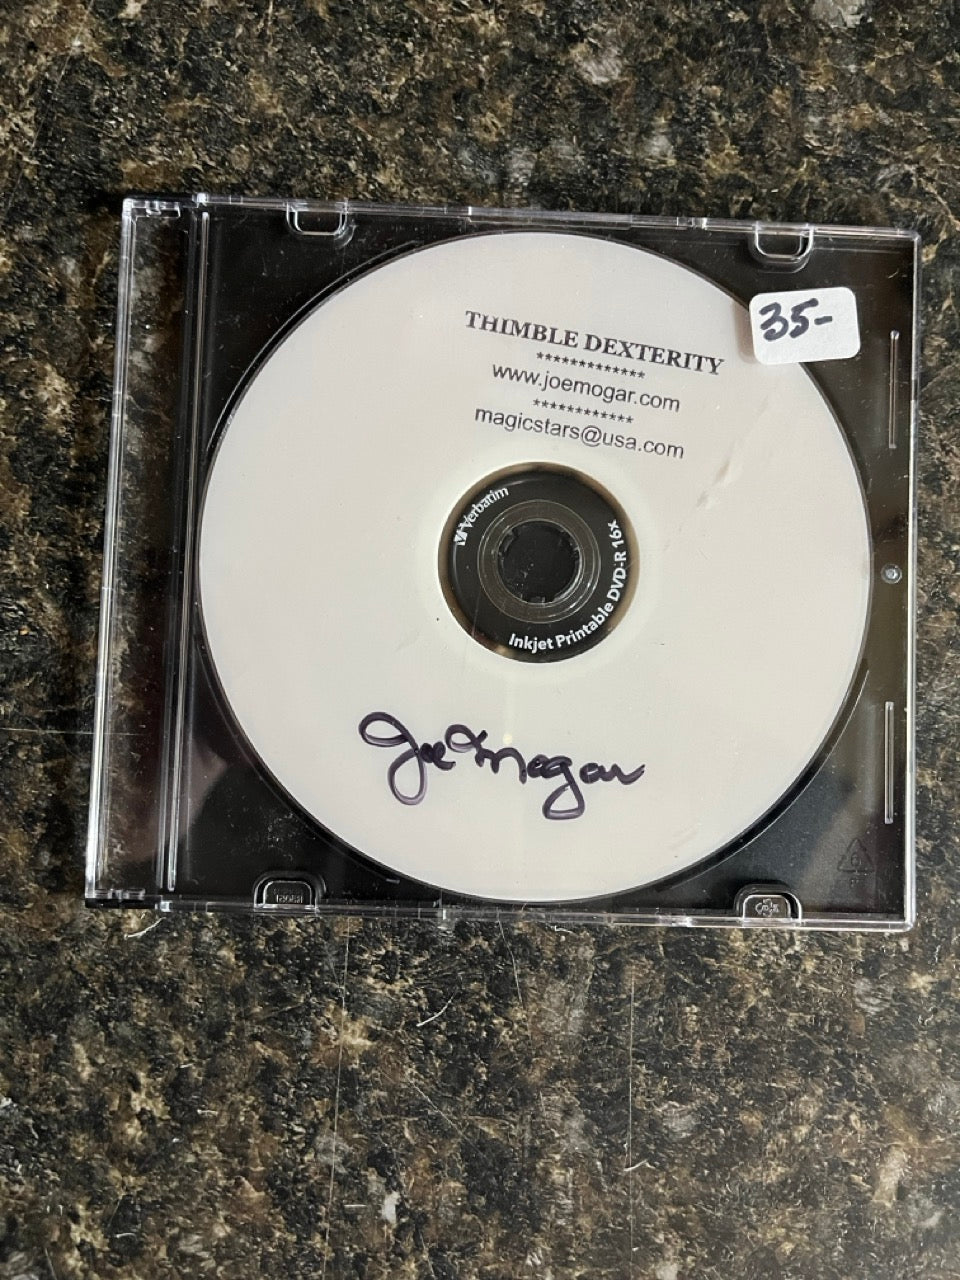 Thimble Dexterity - Joe Mogar (DVD) SIGNED